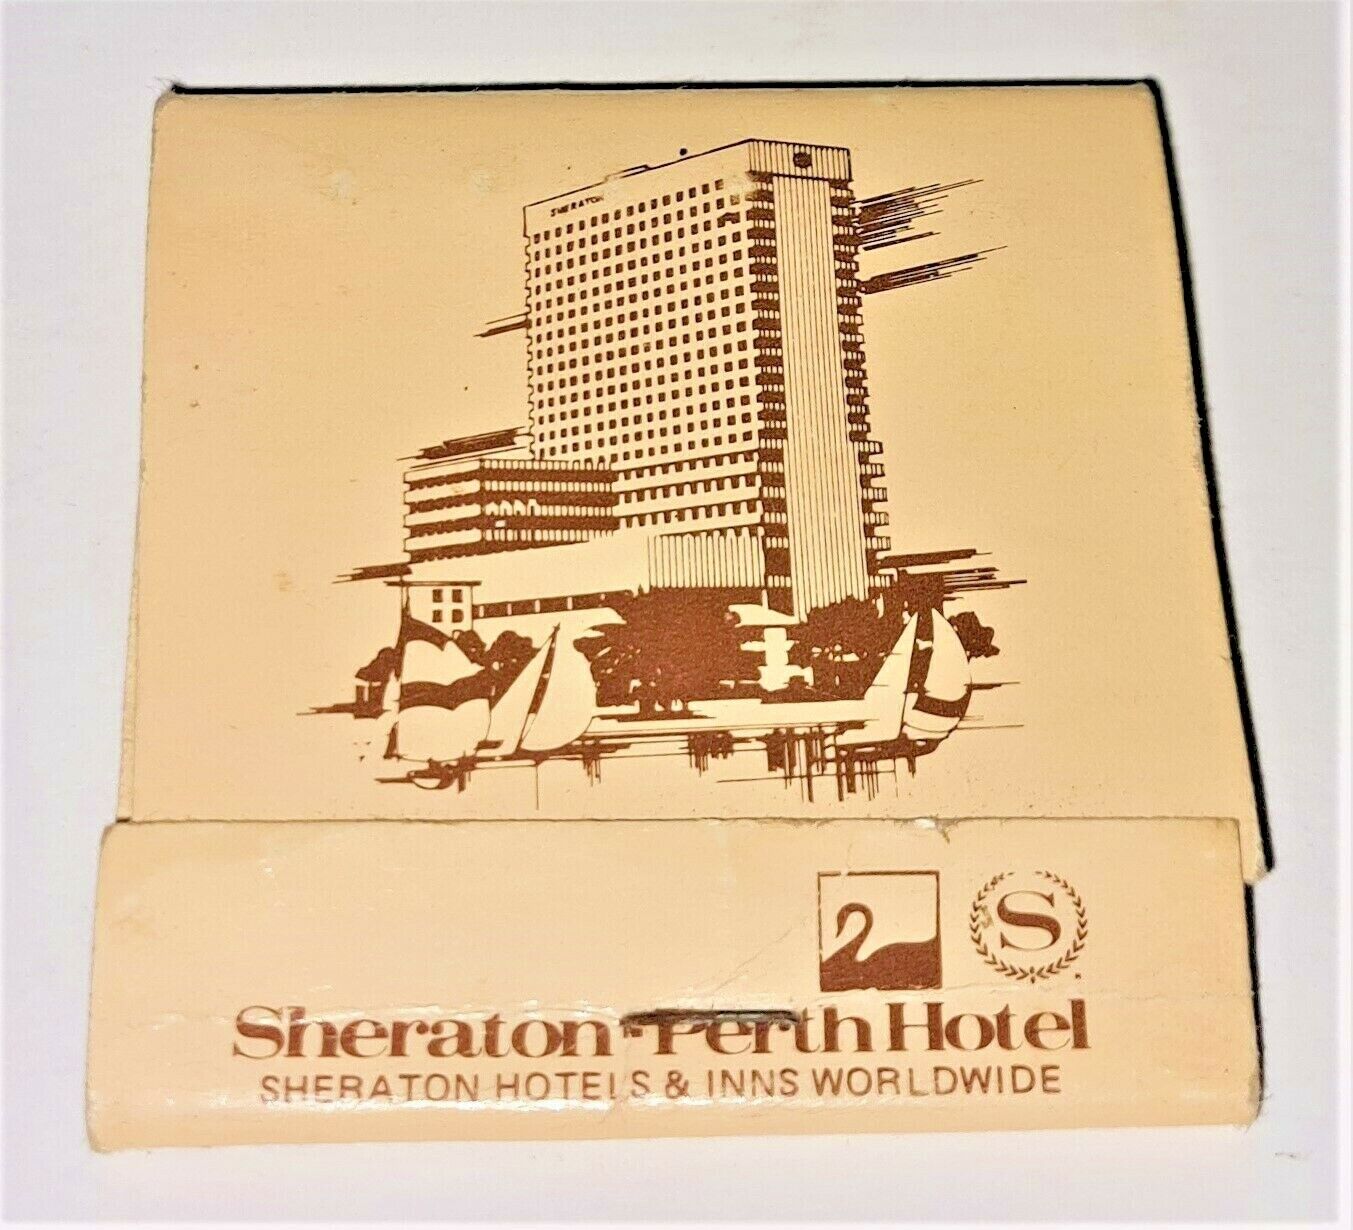 SHERATON PERTH HOTEL MATCHBOOK RARE (SHERATON HOTELS & INNS WORLDWIDE)